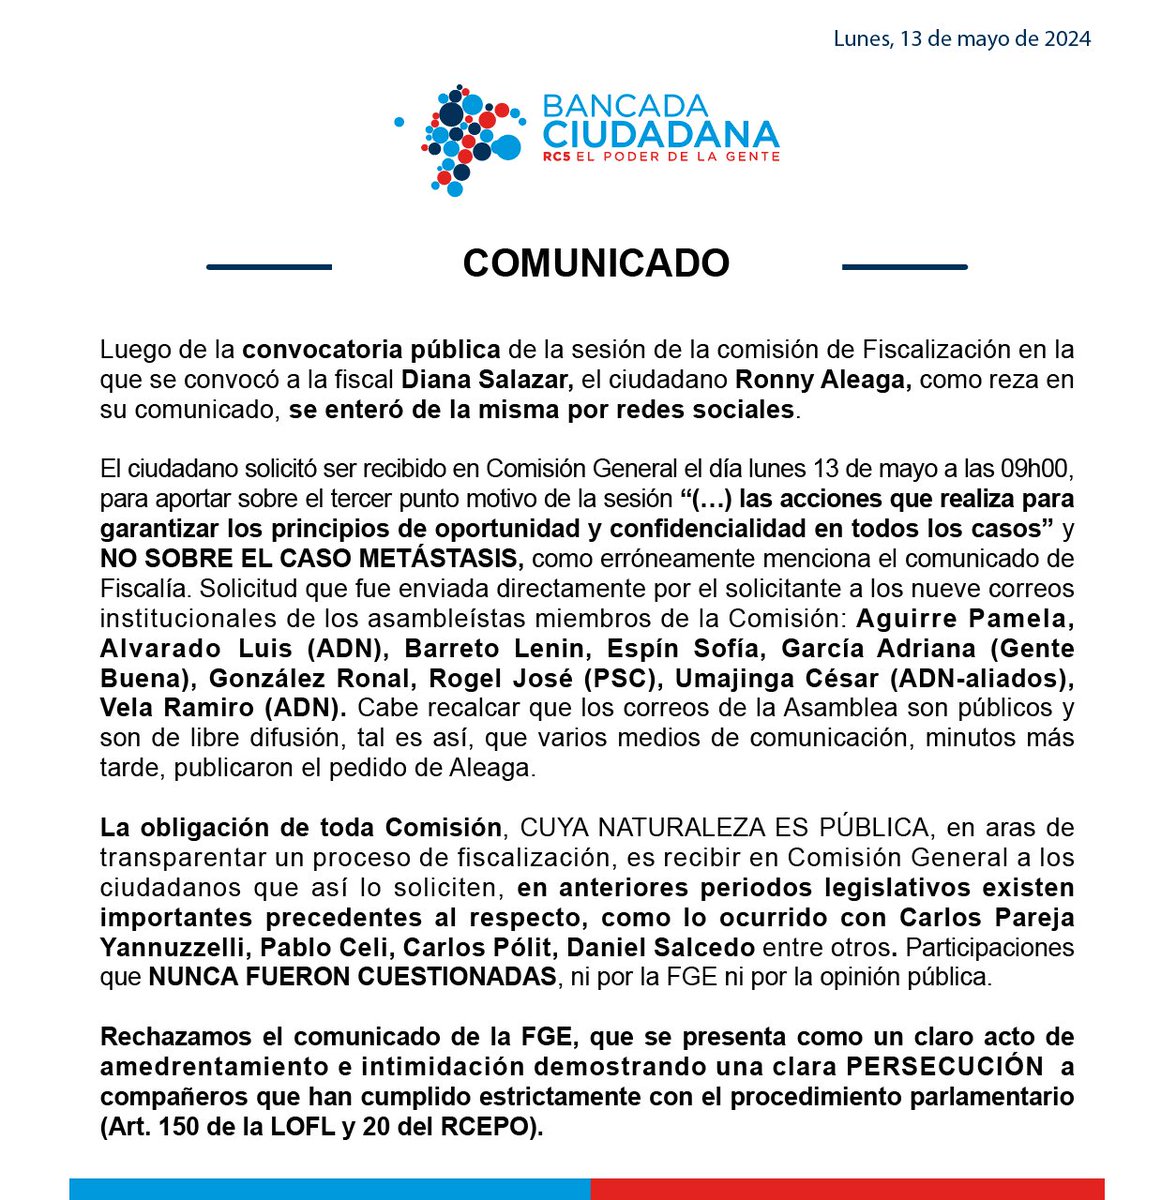 • COMUNICADO
#BancadaCiudadana @BancadaRC5